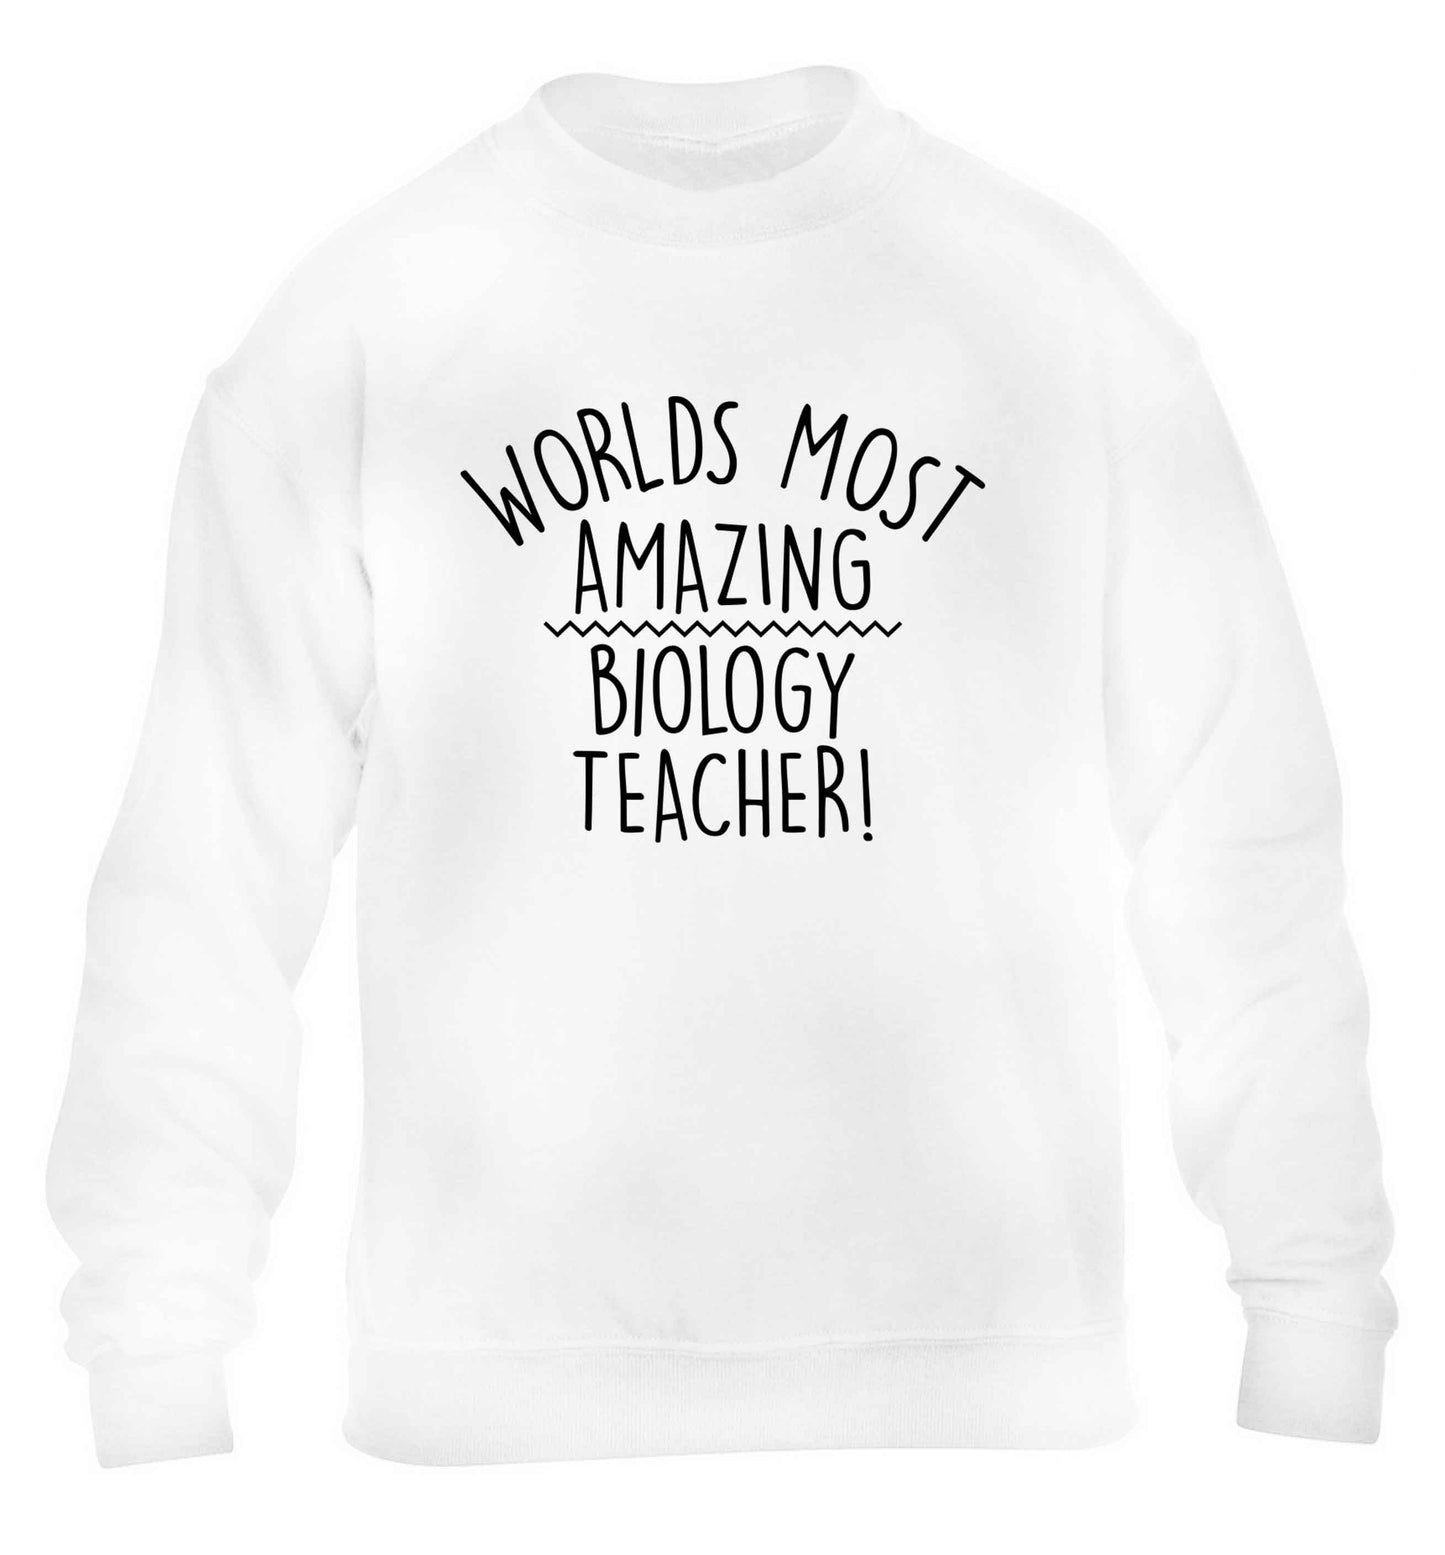 Worlds most amazing biology teacher children's white sweater 12-13 Years